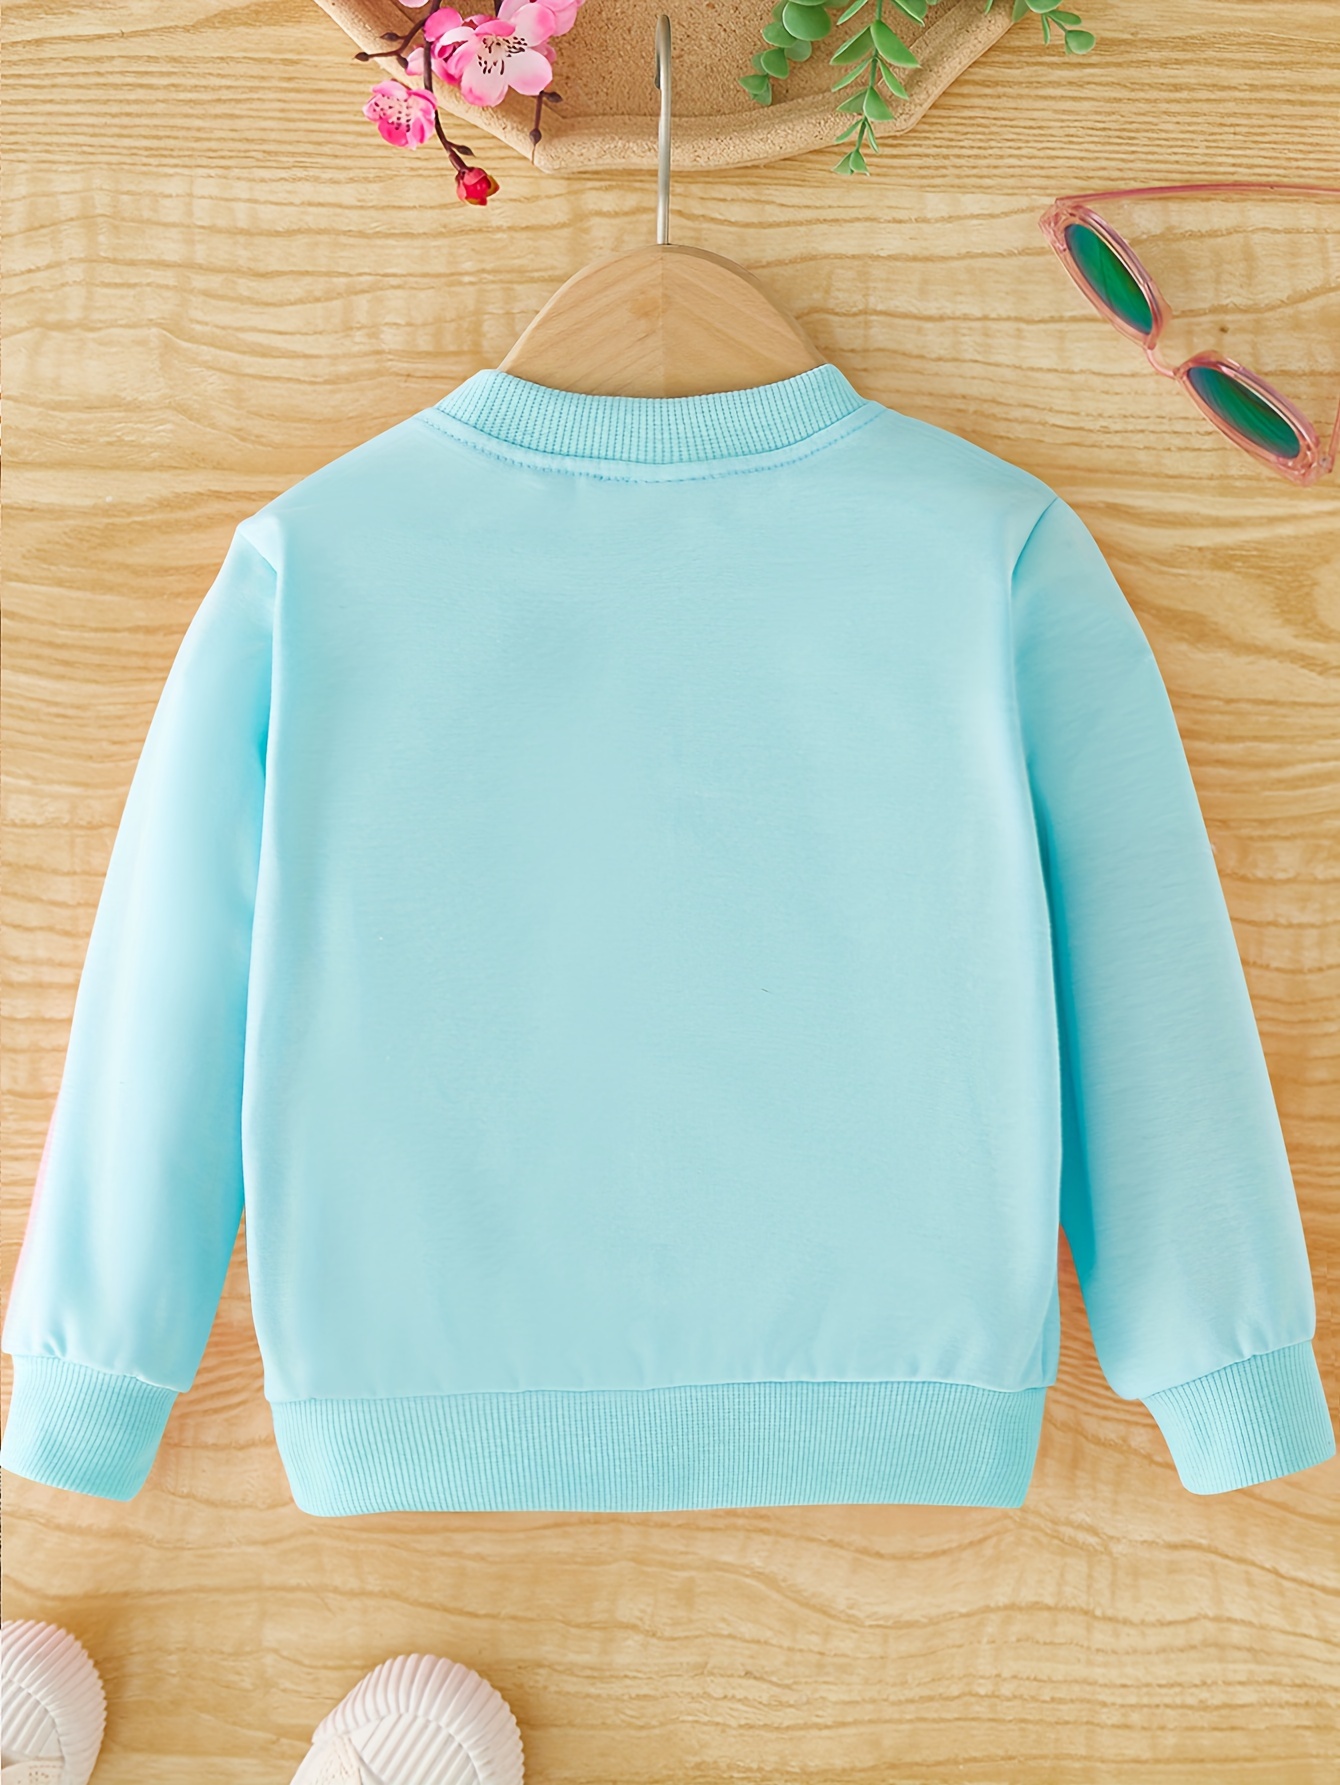  Cute Tops for Teens Tops Casual Hoodless Sweatshirt